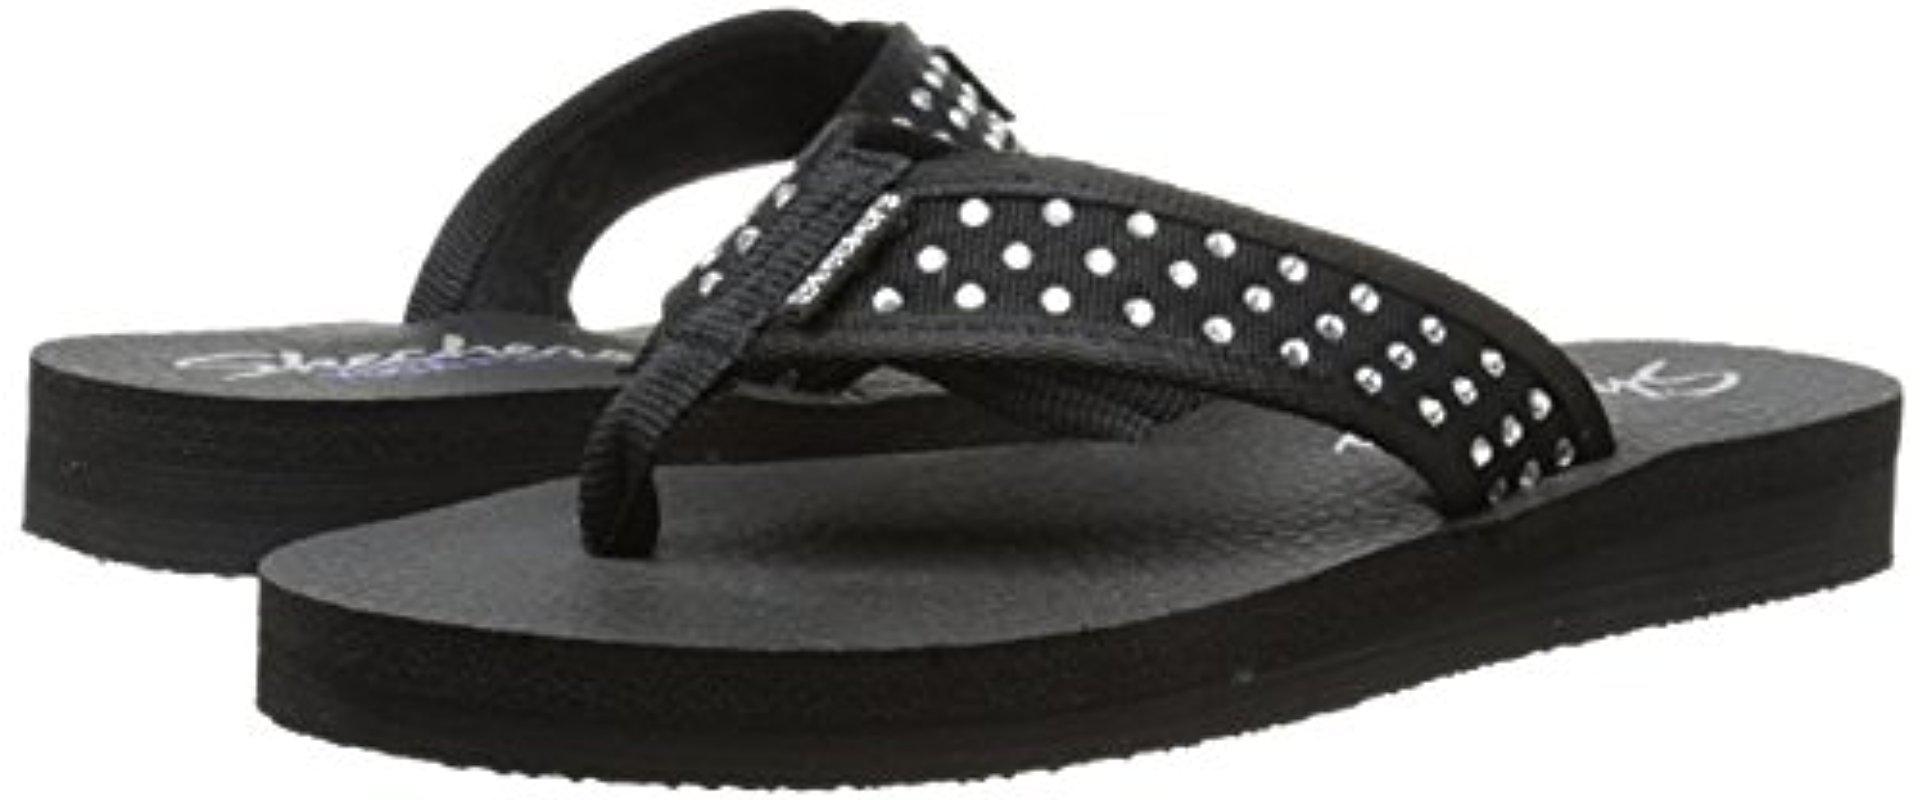 skechers black sandals with rhinestones